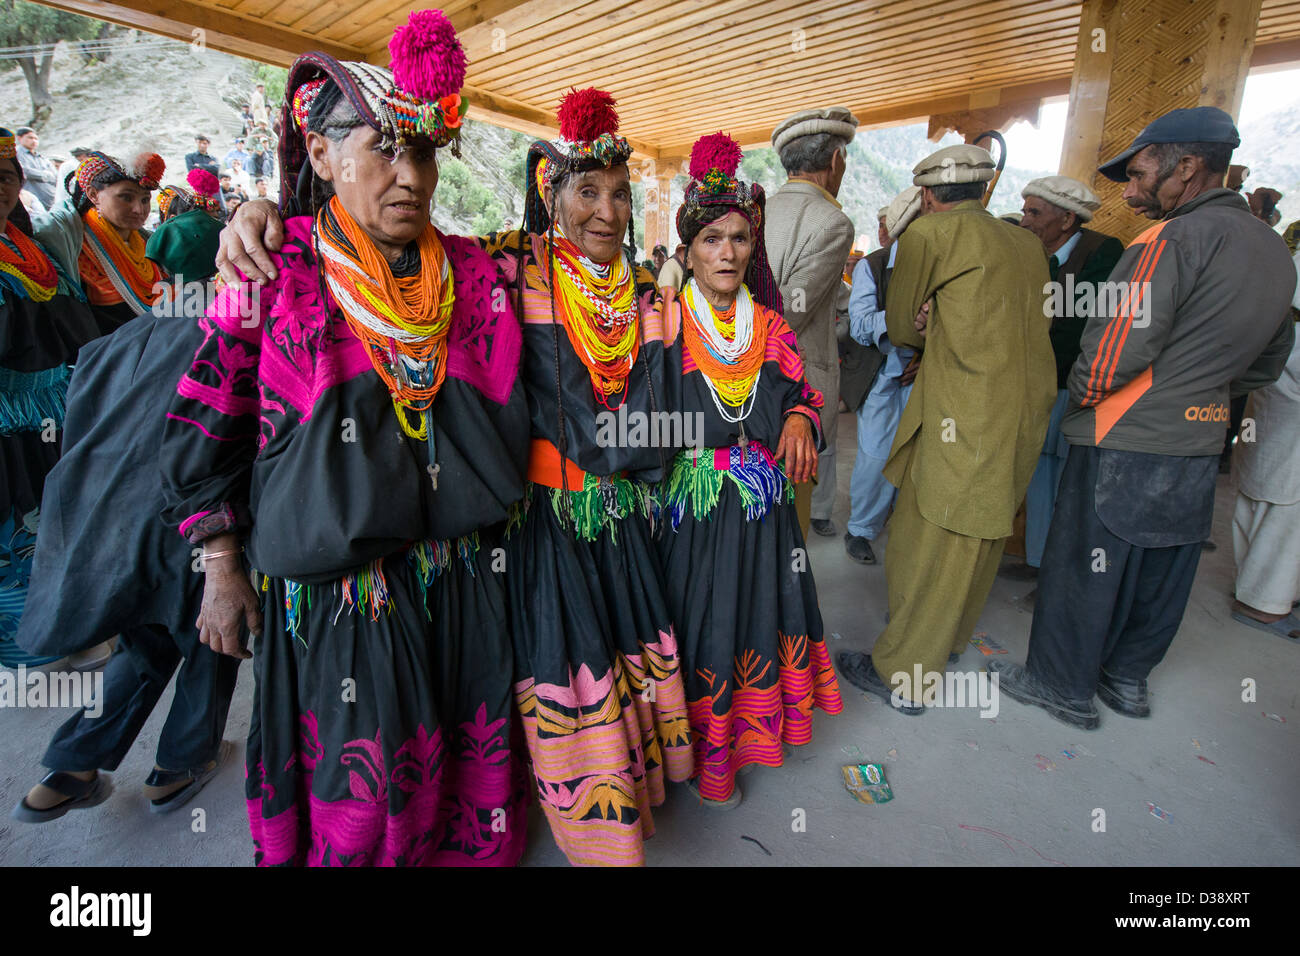 Kalash women dancing in a line at the Kalash Joshi (Spring Festival), Grum Village Charso (dancing ground), Rumbur Valley, Chitral, Khyber-Pakhtunkhwa, Pakistan Stock Photo